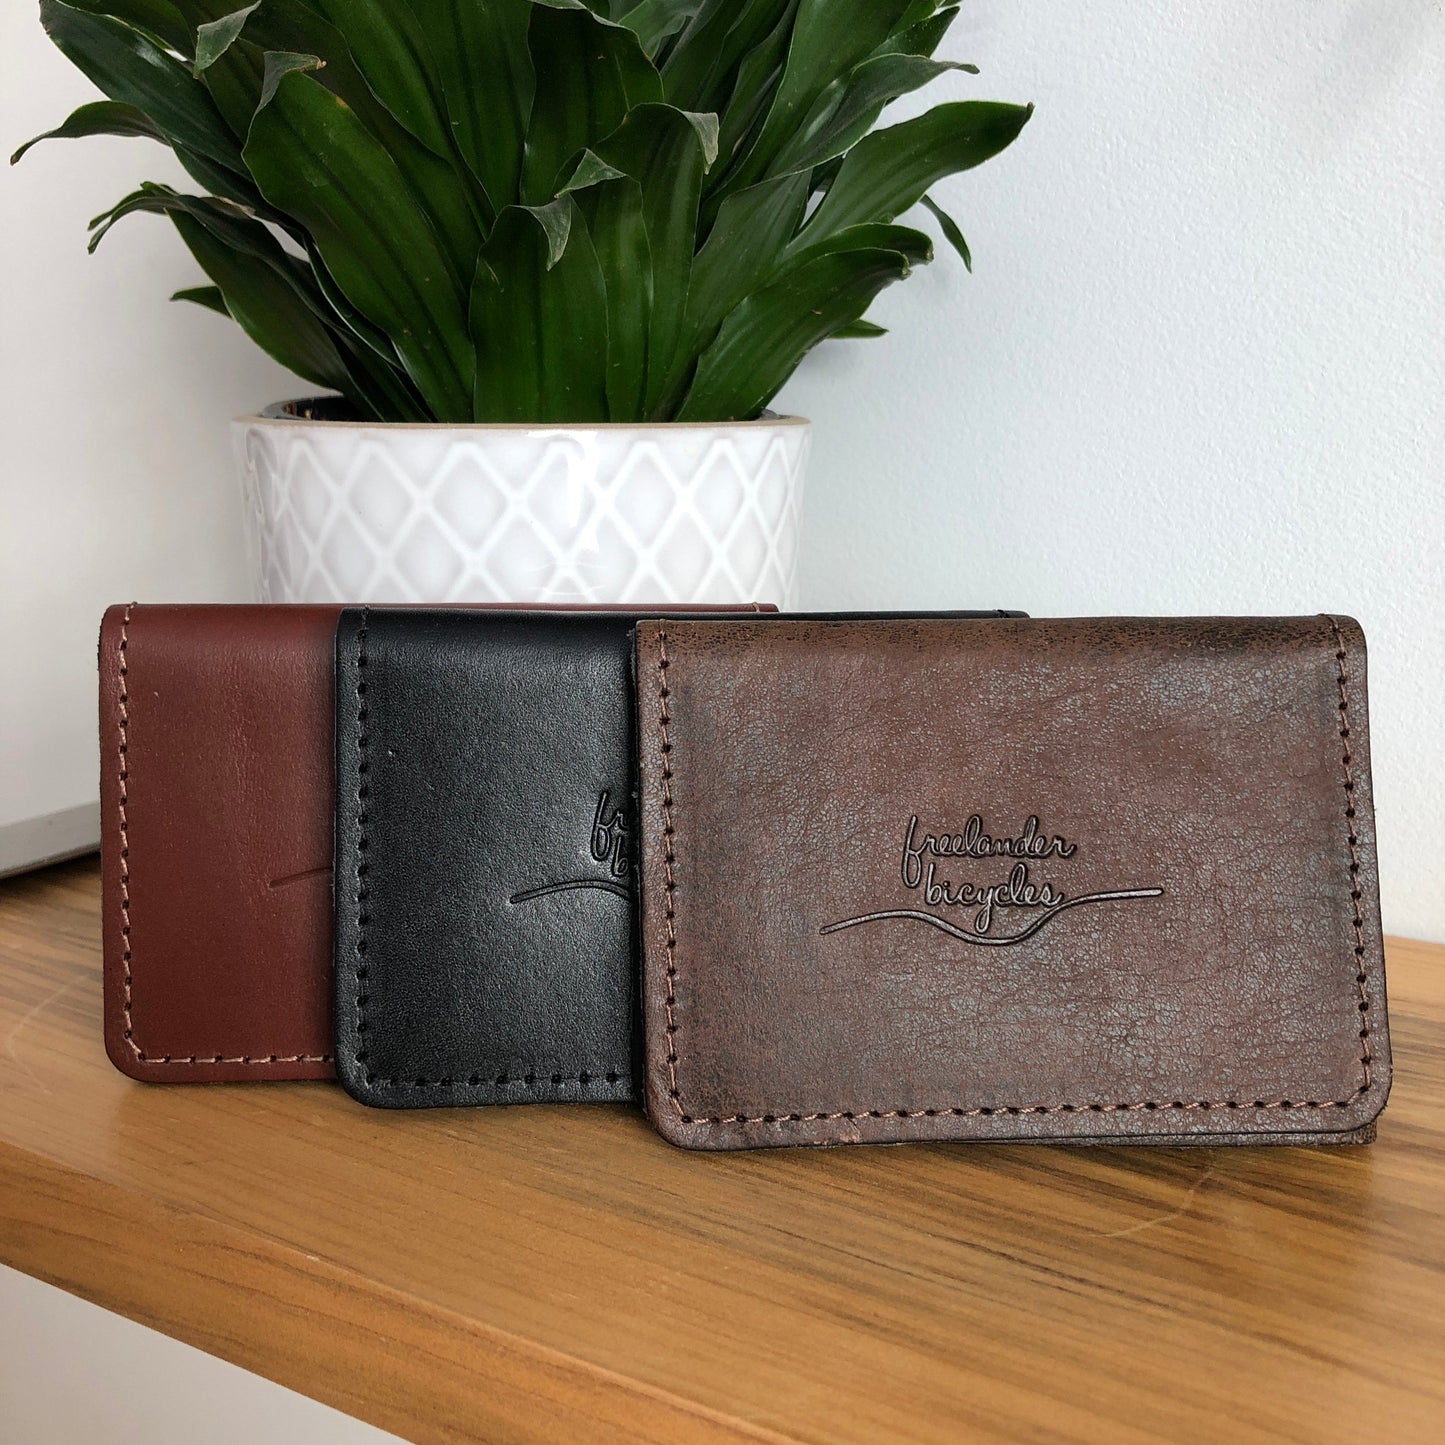 Wallet: Just the Essentials: Brown